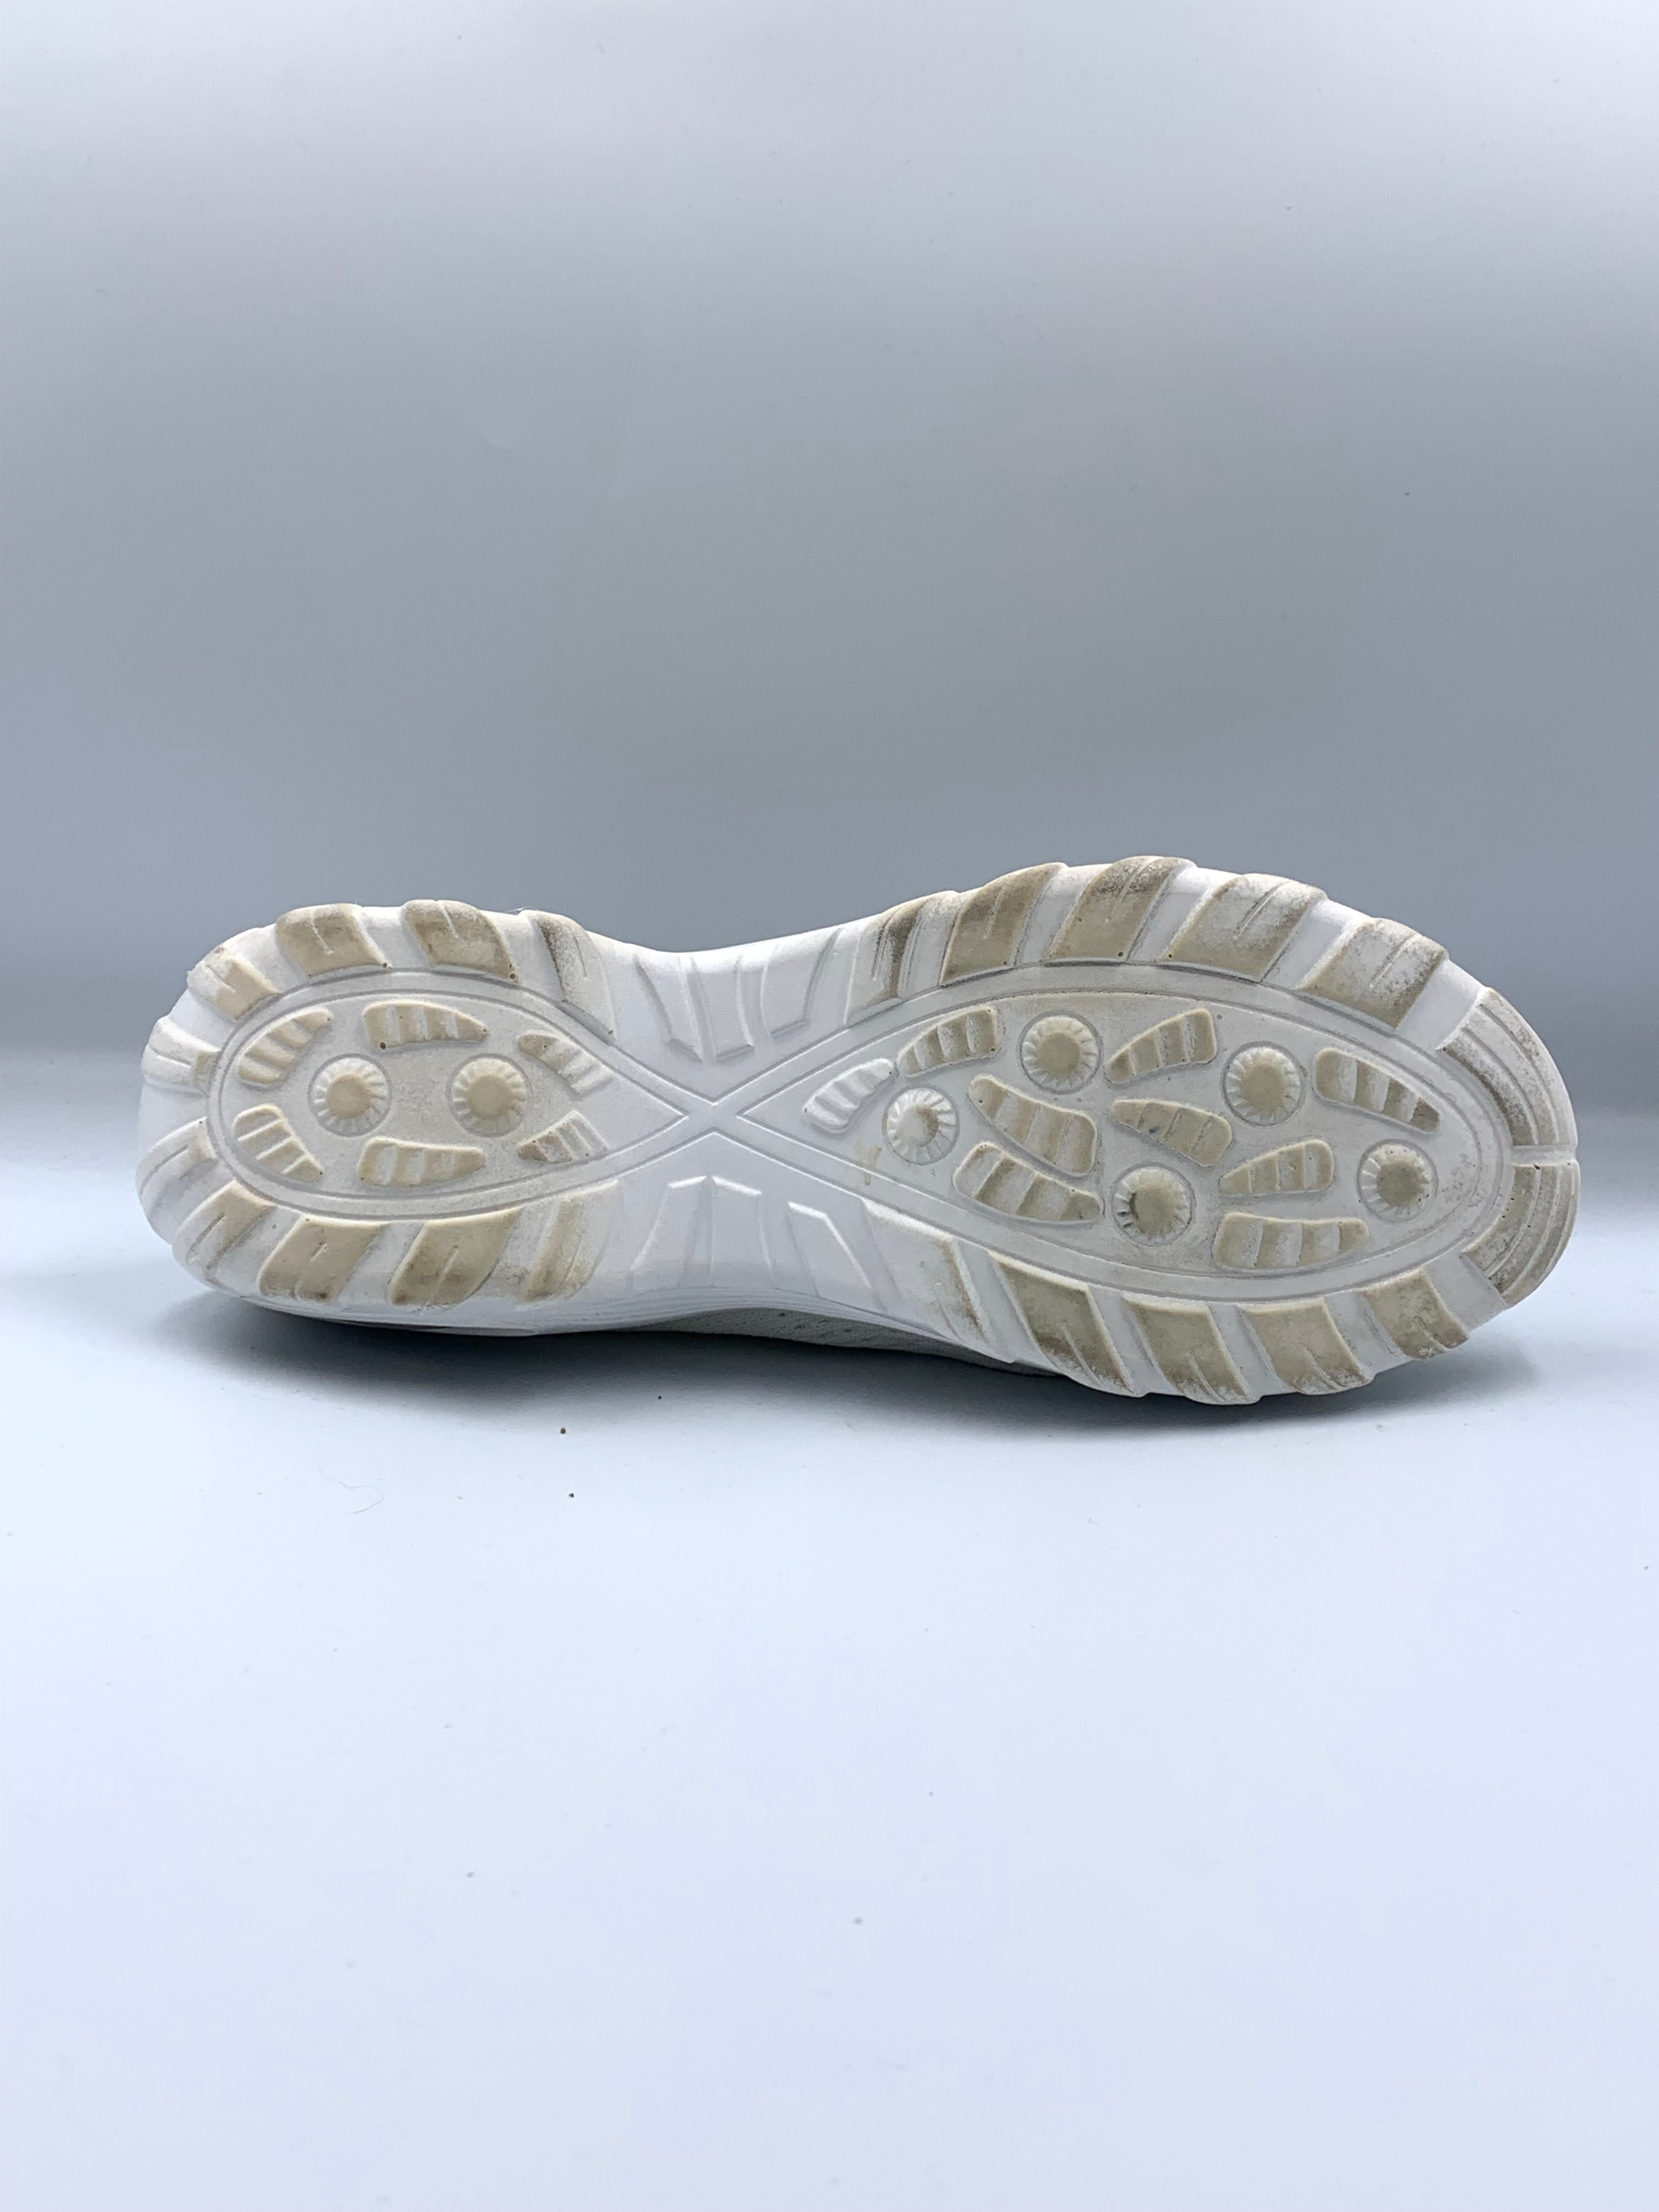 Skechers Original Brand Sports White Running For Women Shoes